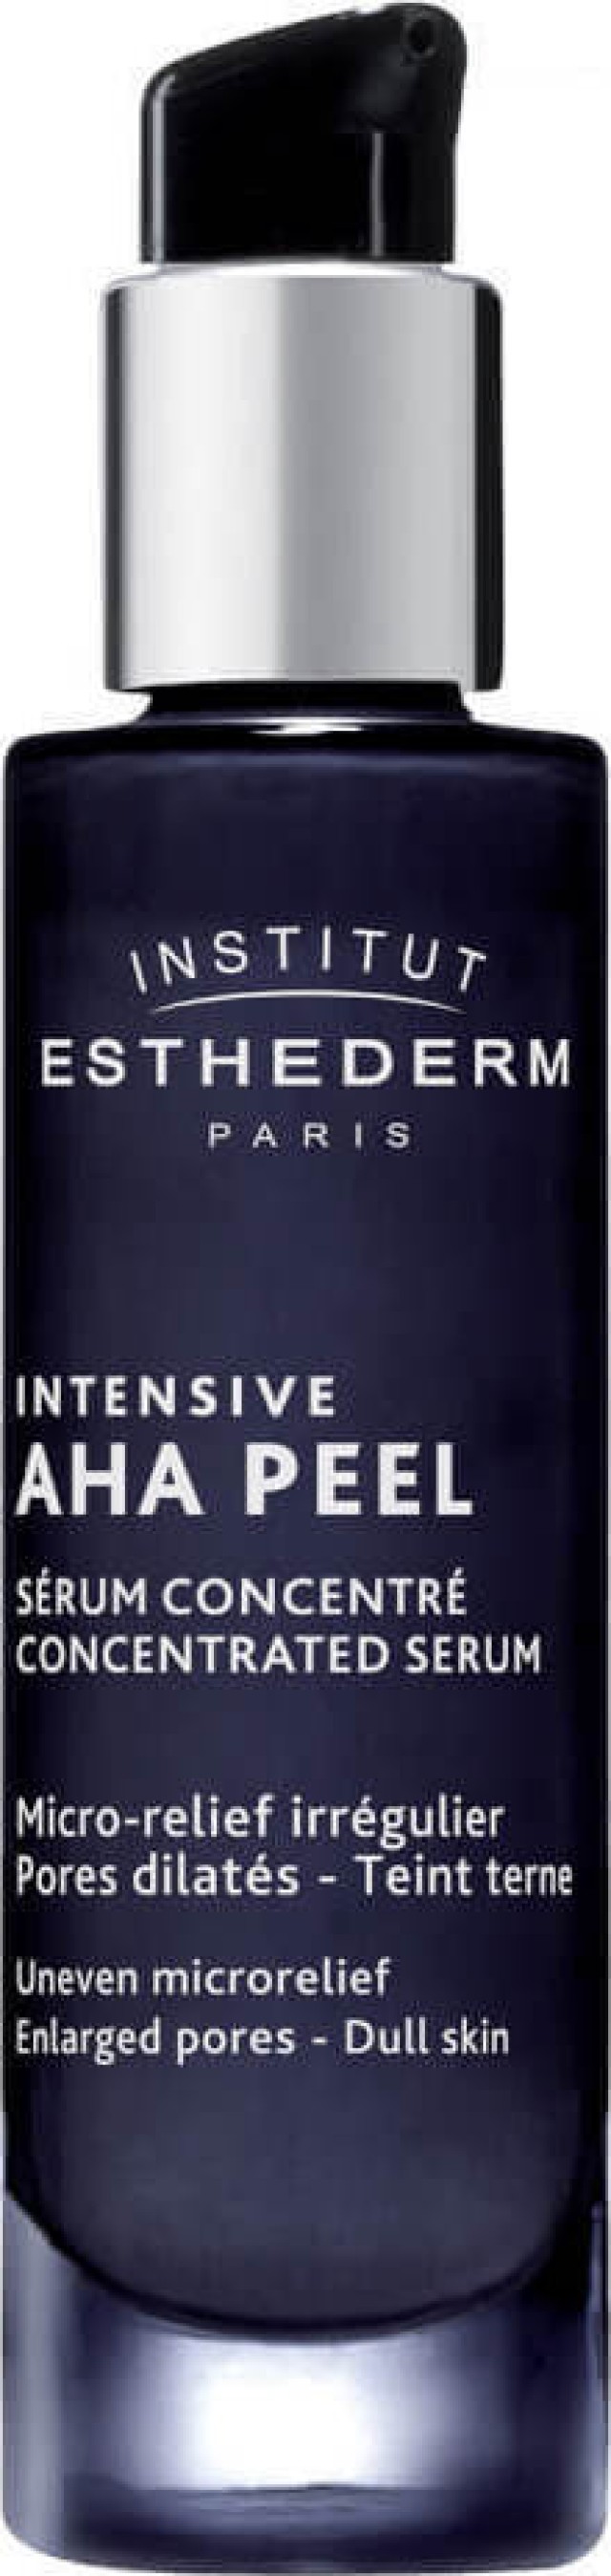 Institut Esthederm Intensive AHA Peel Concetrated Serum Ορός για Άμεση Λείανση της Επιδερμίδας 30ml